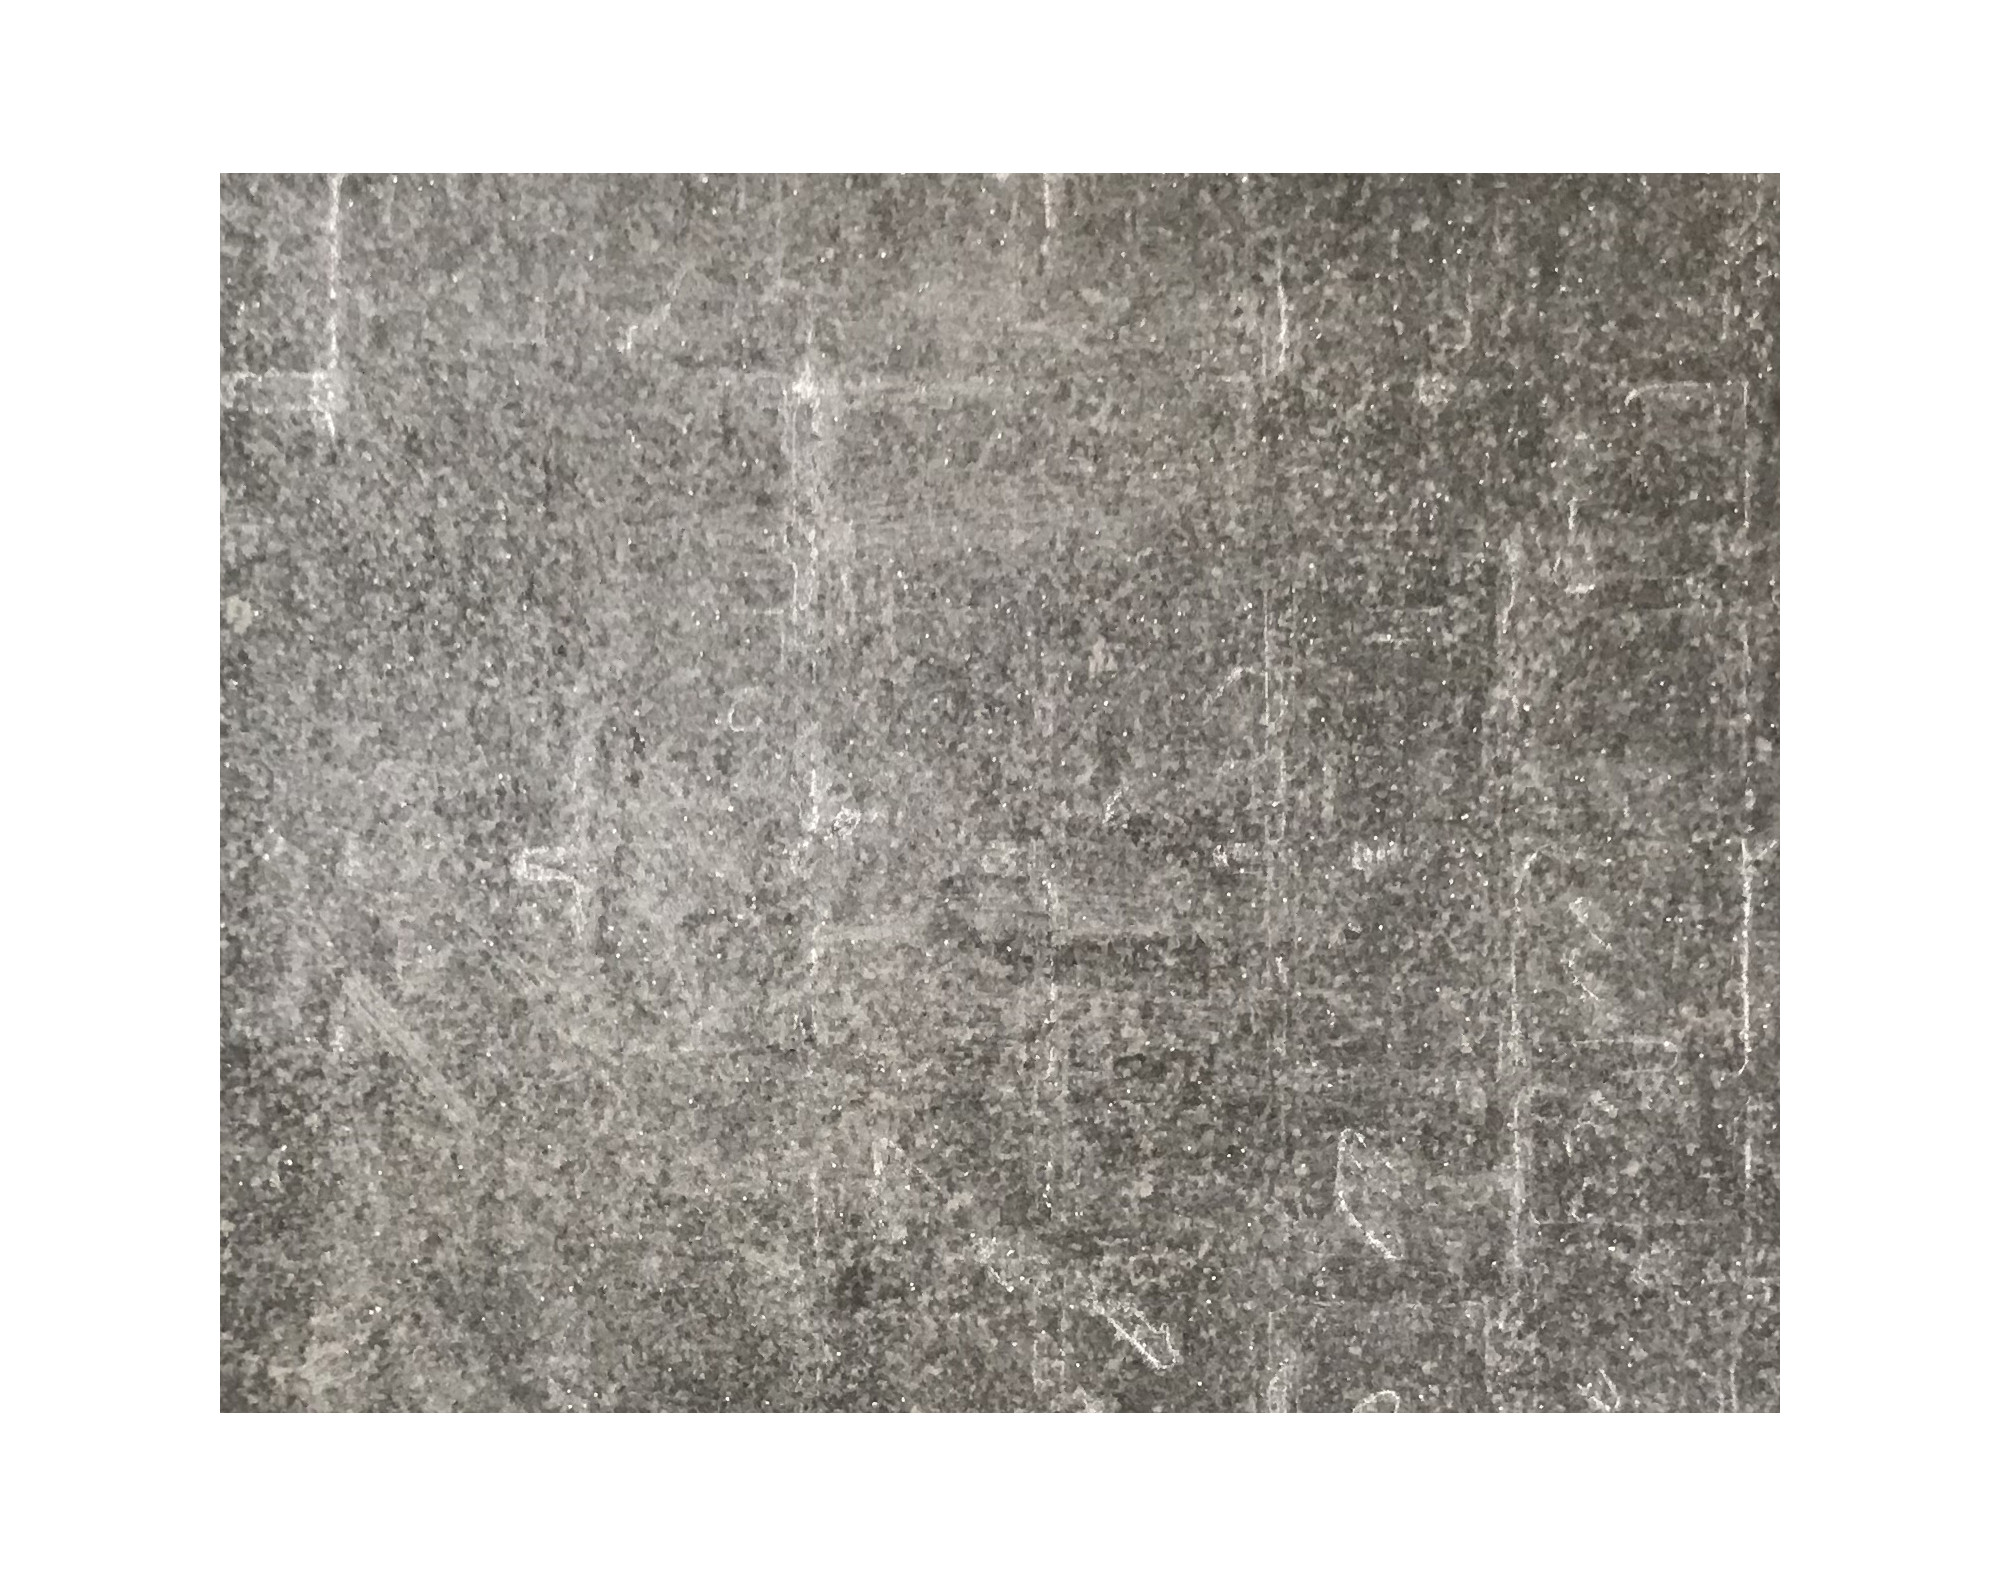 Harmo Roc maranelloset, keramiek-serie, rond d: 3,50 m, zand zwart, keramisch porselein